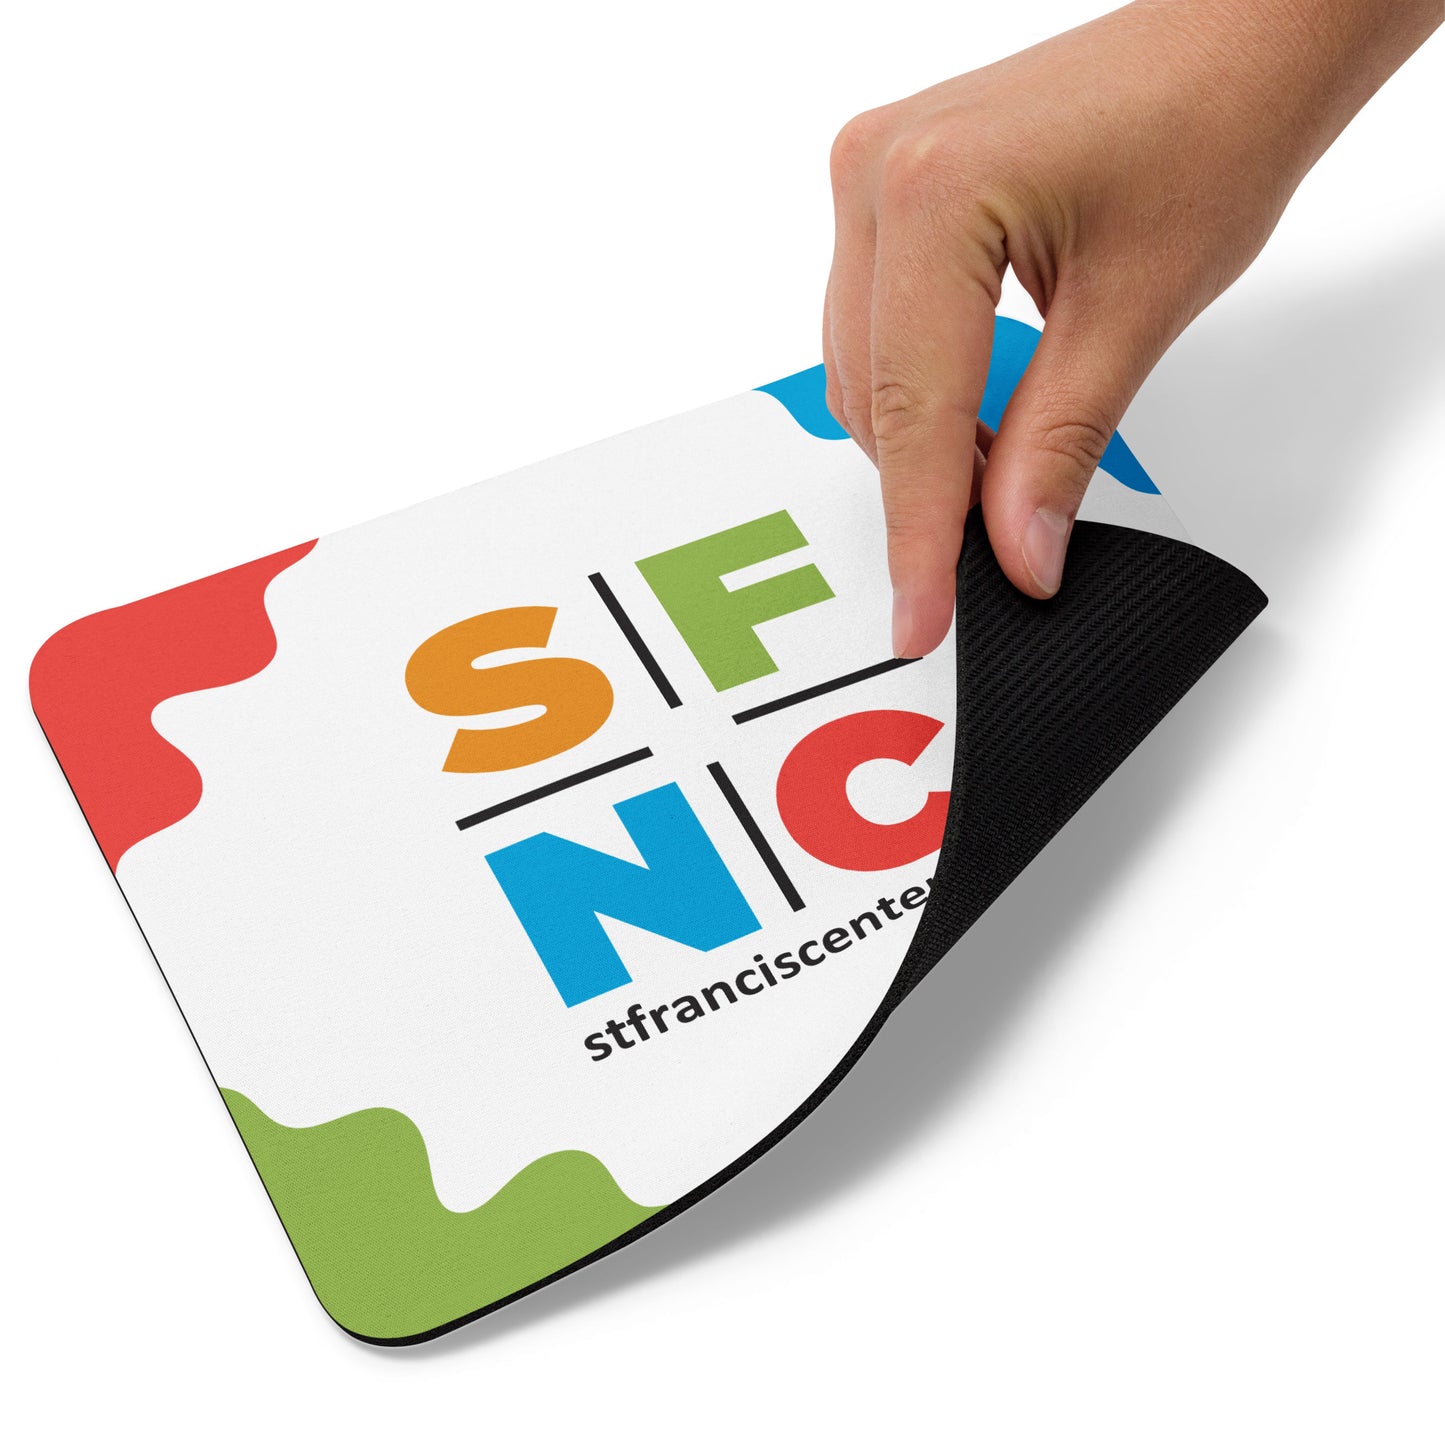 SFNC Logo Mouse Pad